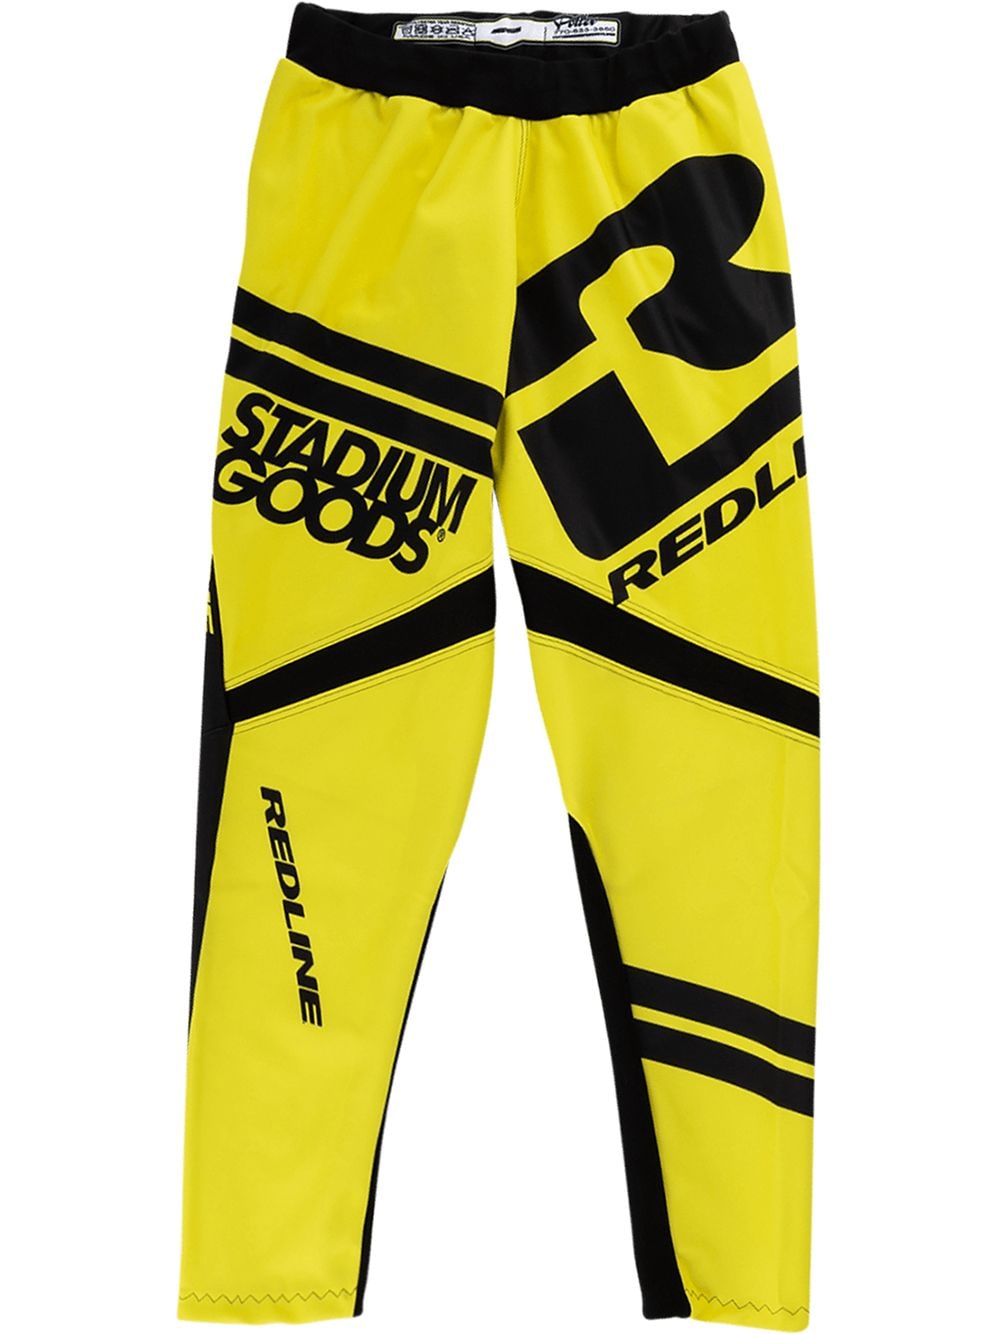 Redline x A$AP Ferg X Stadium Goods Race track pants - Yellow von Redline